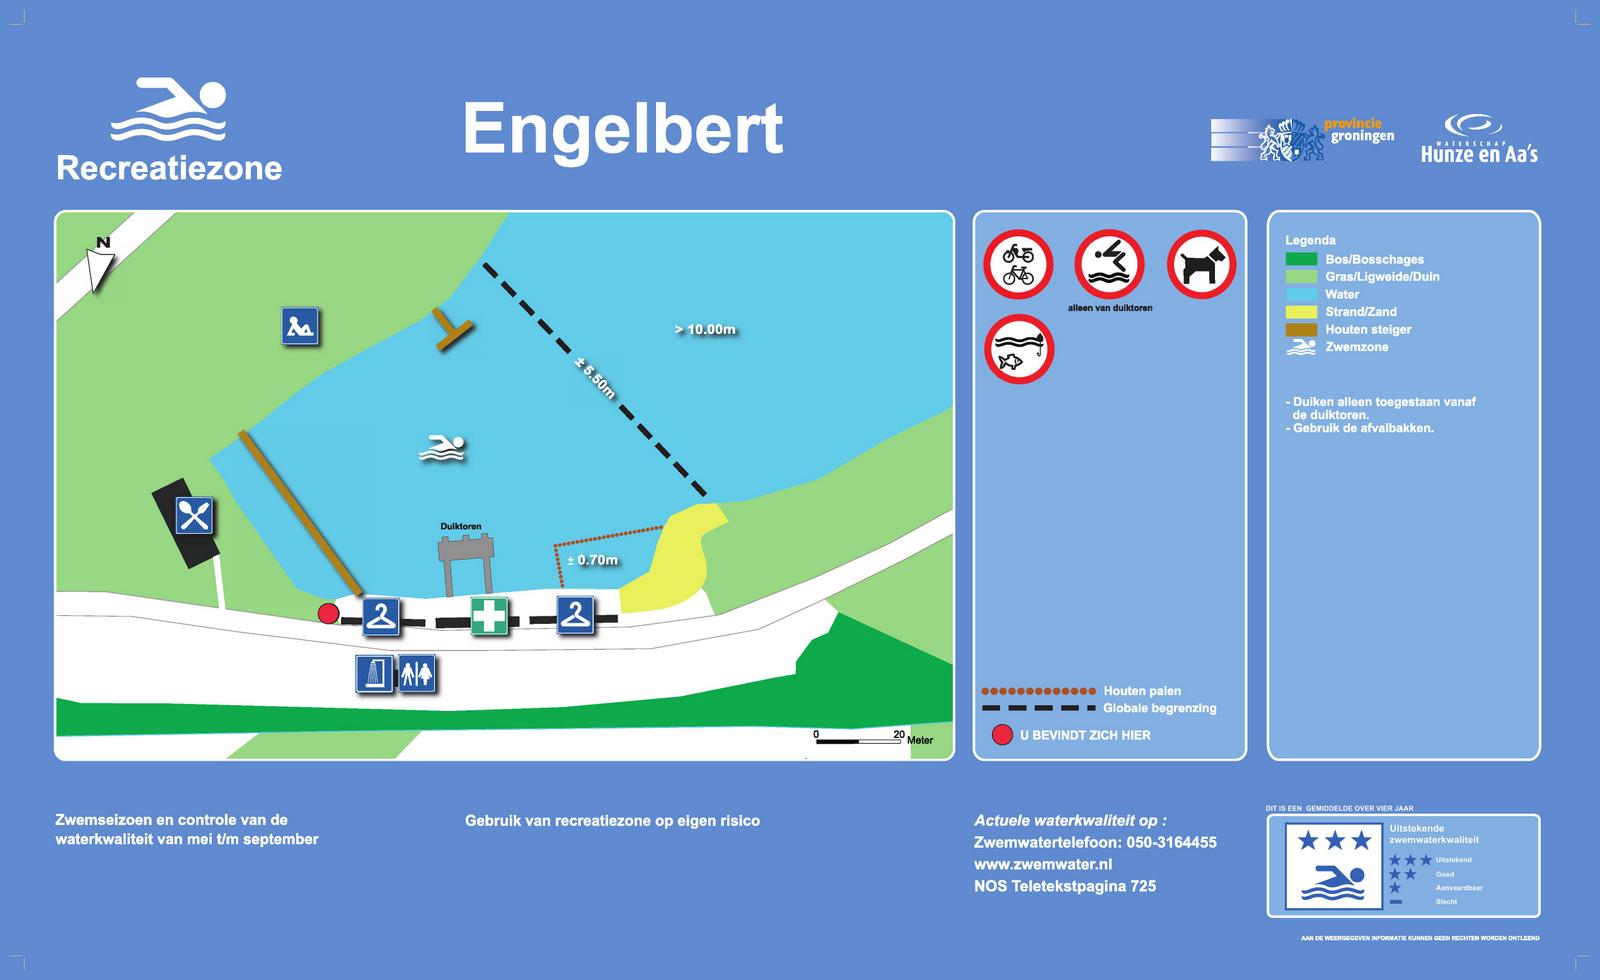 The information board at the swimming location Recreatieplas Engelbert